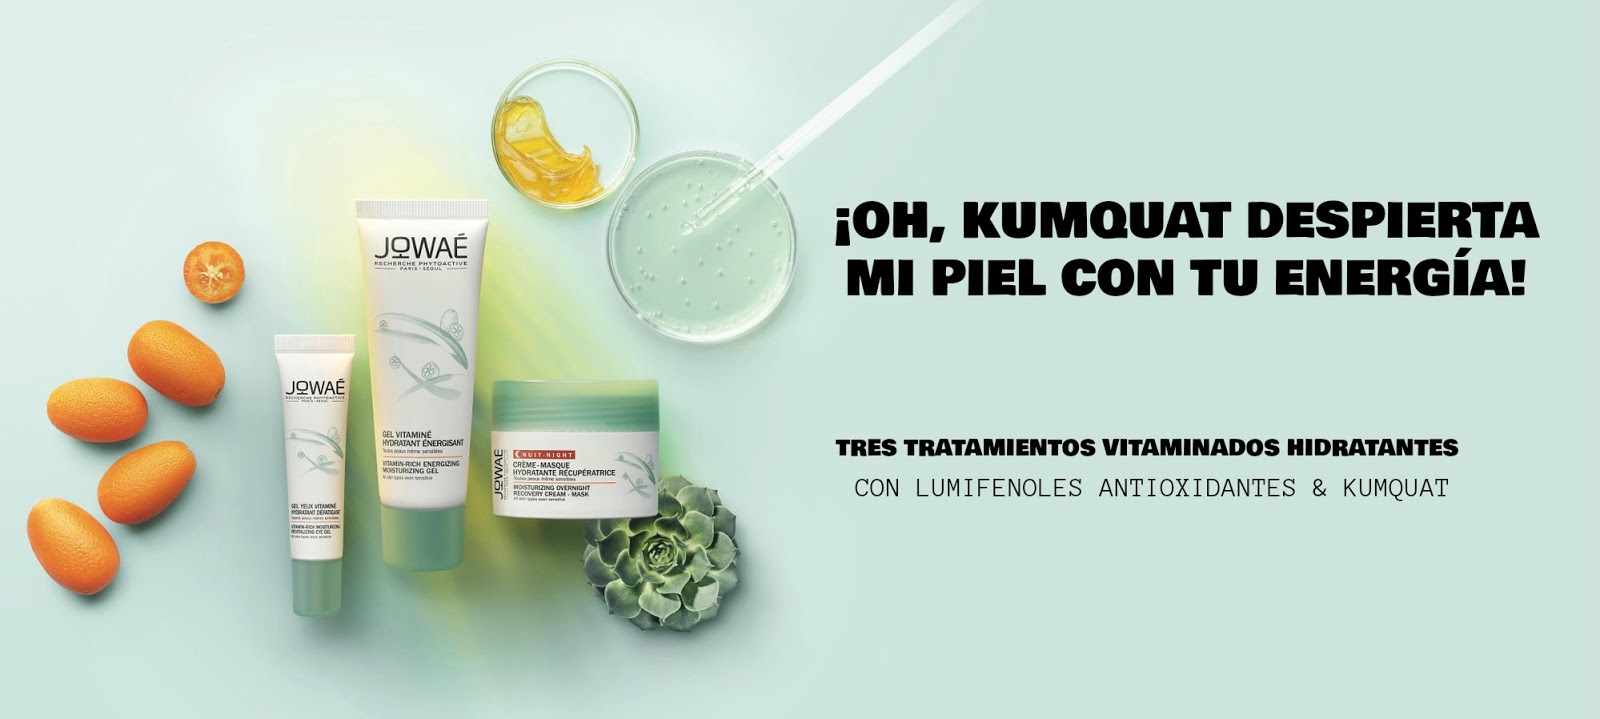 Blog Parafarmacia online: Farmacia Díez: Somatoline Reductor Intensivo 7  noche Promoción 2019 Somatoline desde 19,25 euros